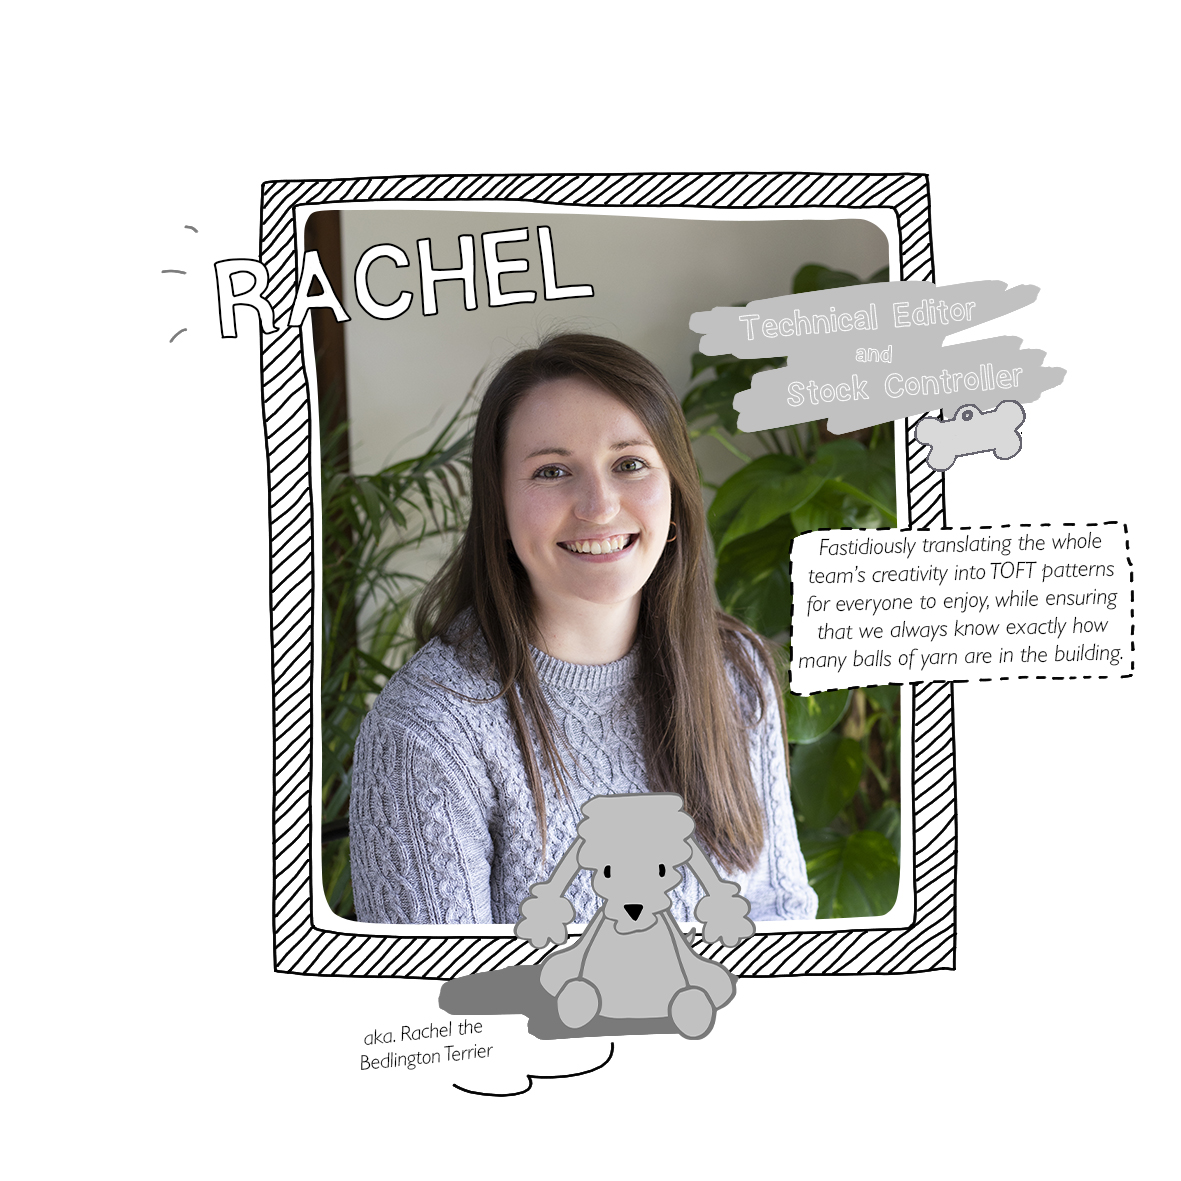 Rachel: Technical Editor and Stock Controller